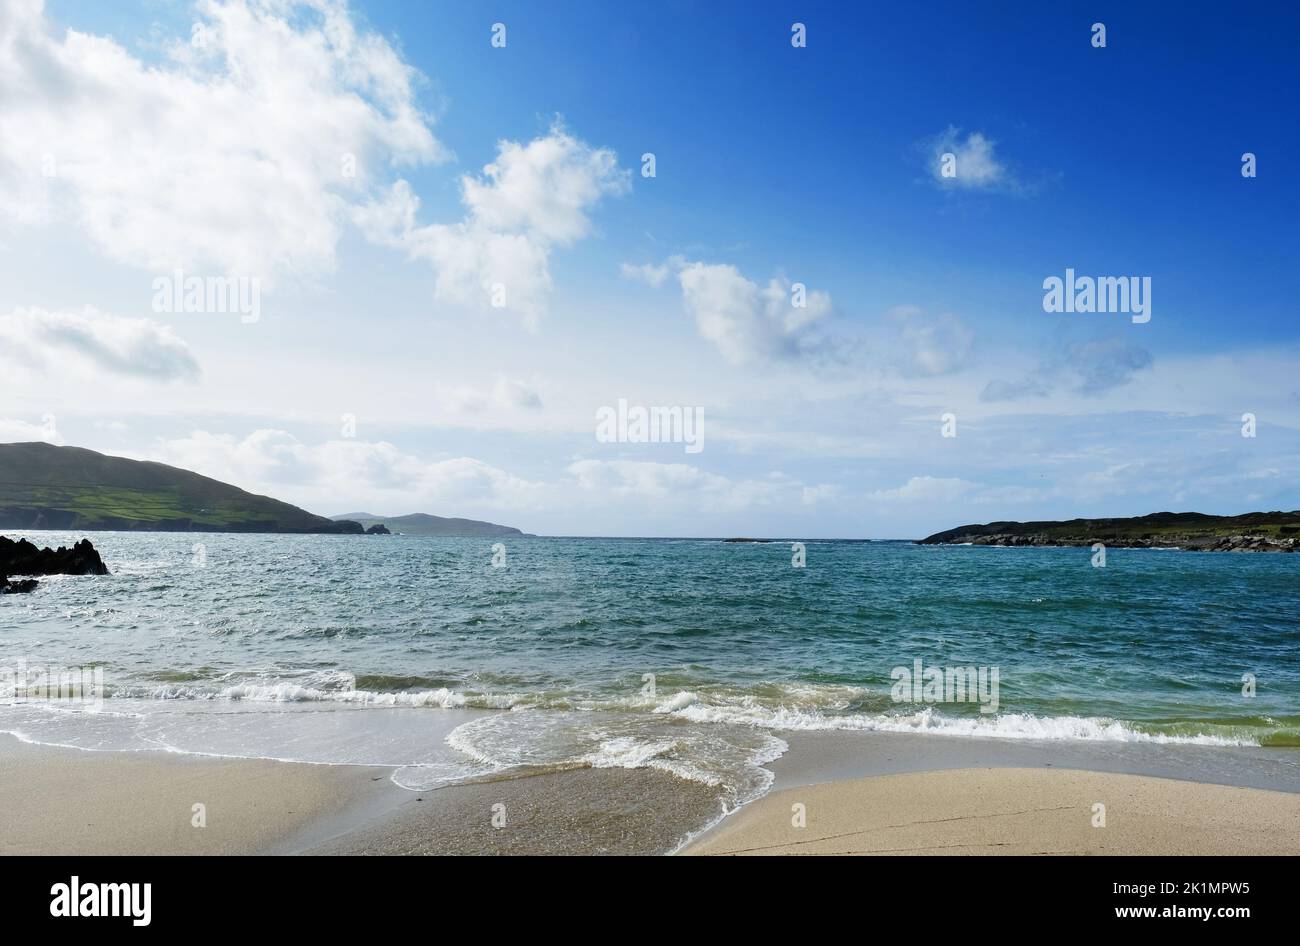 Ballydonegan Bay near Allihies on the Wild Atlantic Way, County Cork, Ireland - John Gollop Stock Photo